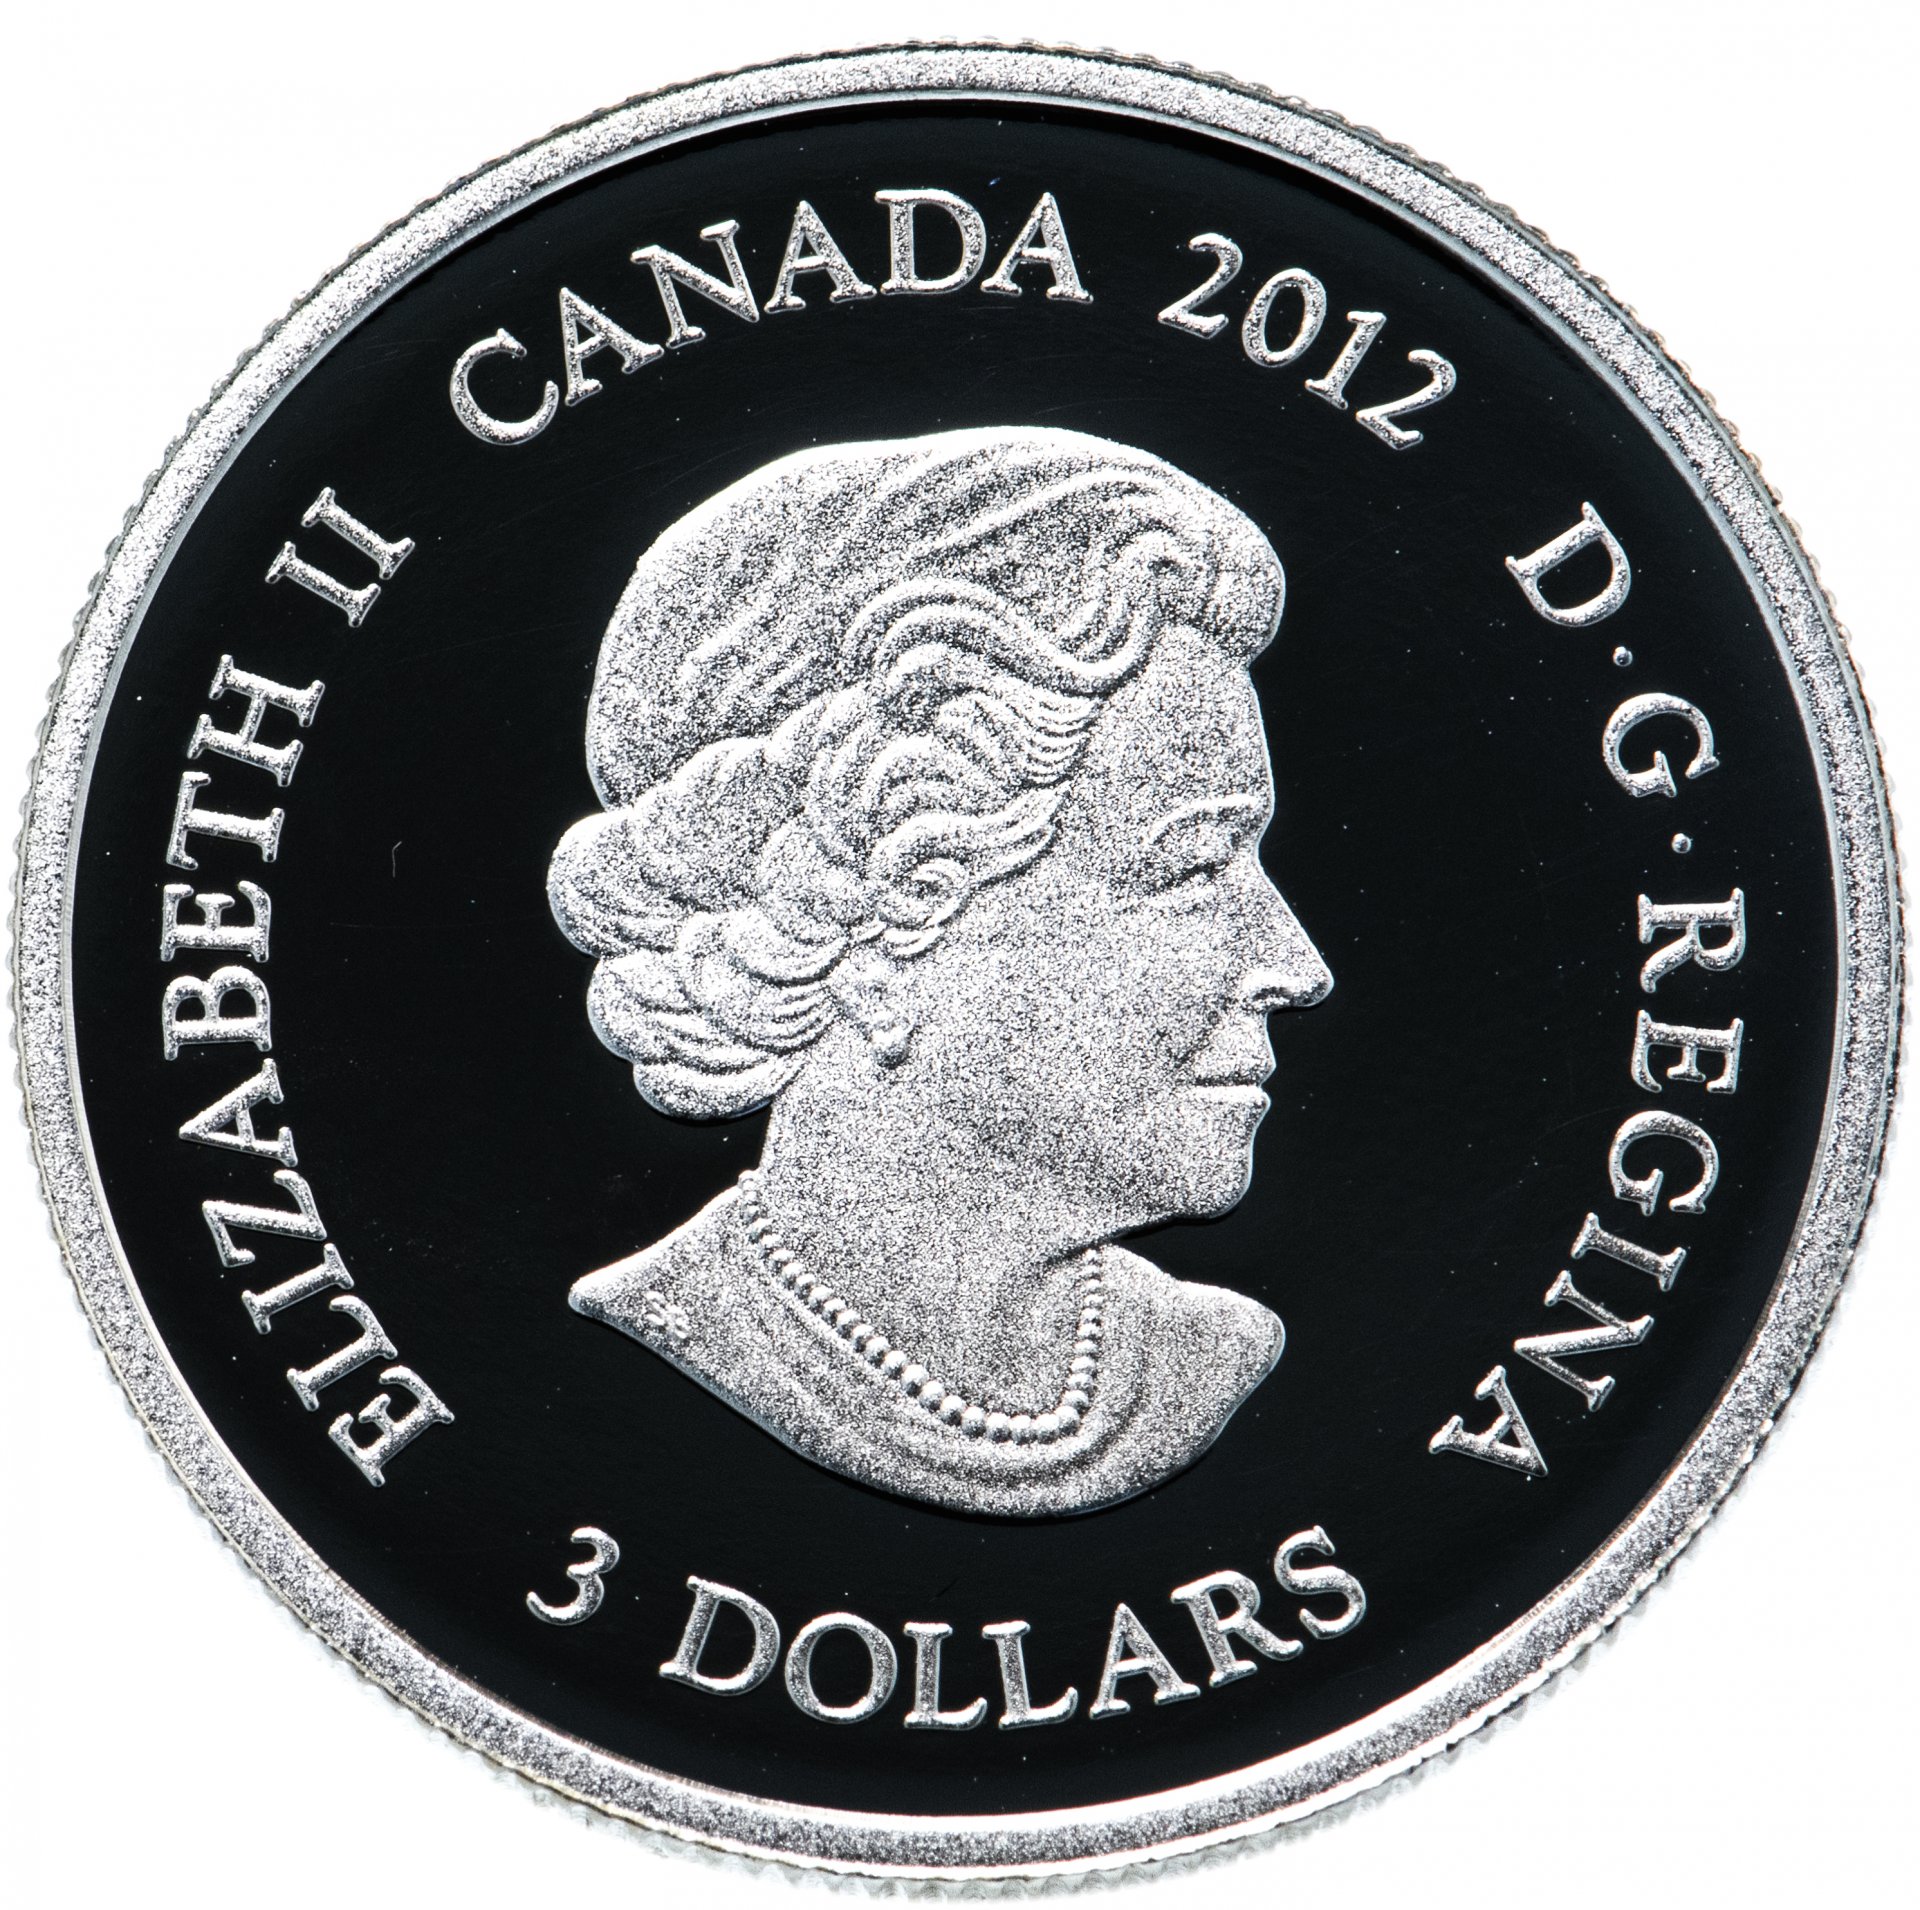 0 3 доллара. 3 Доллара. Доллар в 2012. Марка Канада 3 доллара.